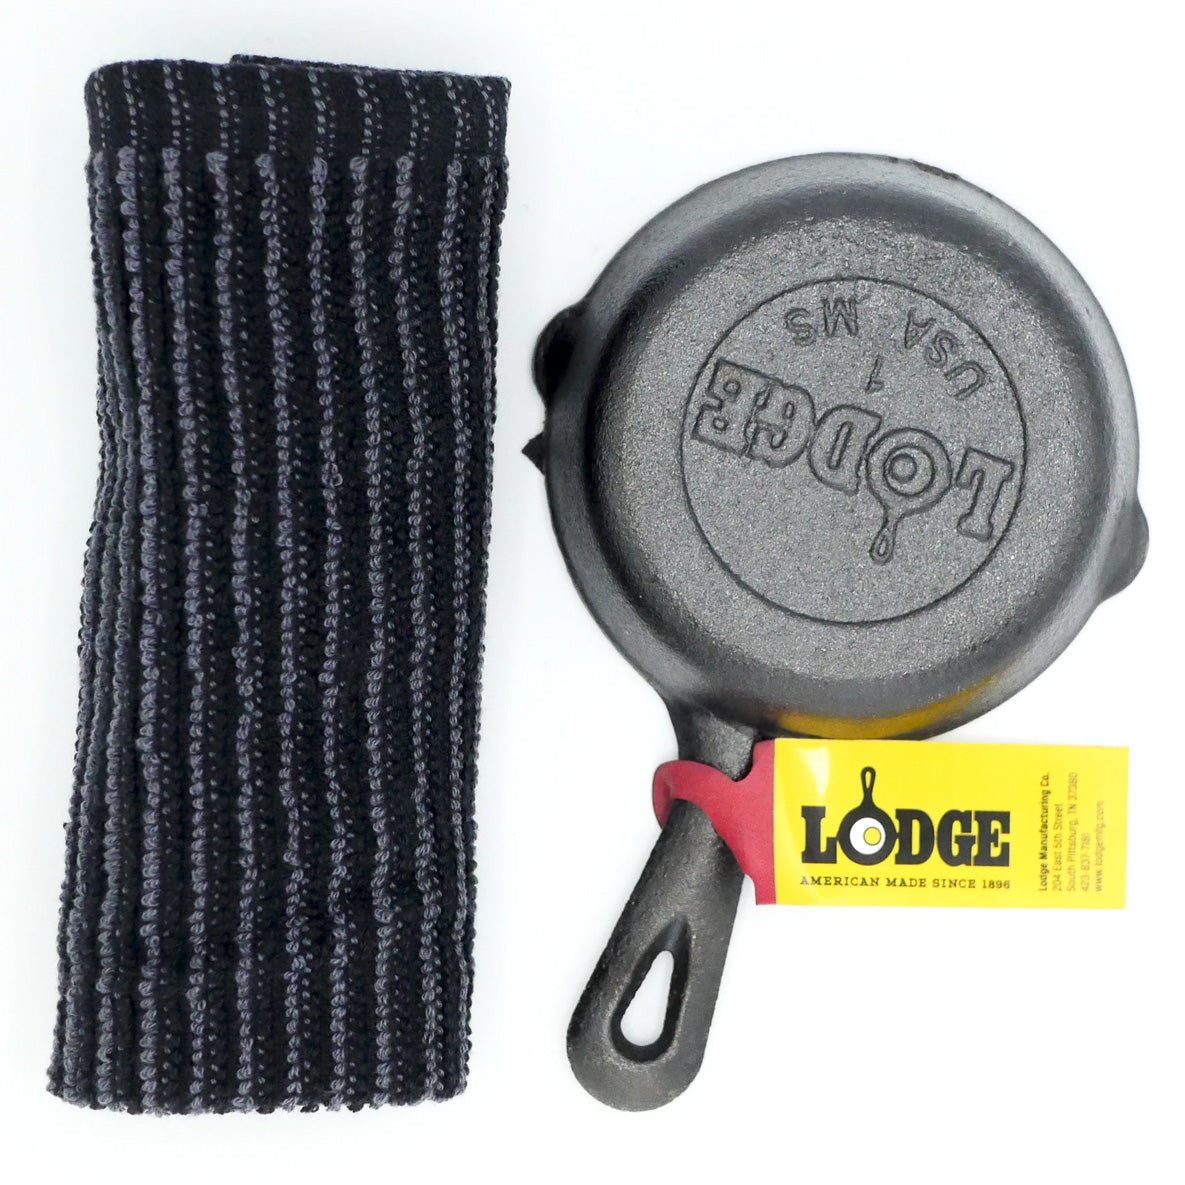 Lodge Cast-Iron Cookware Care Kit